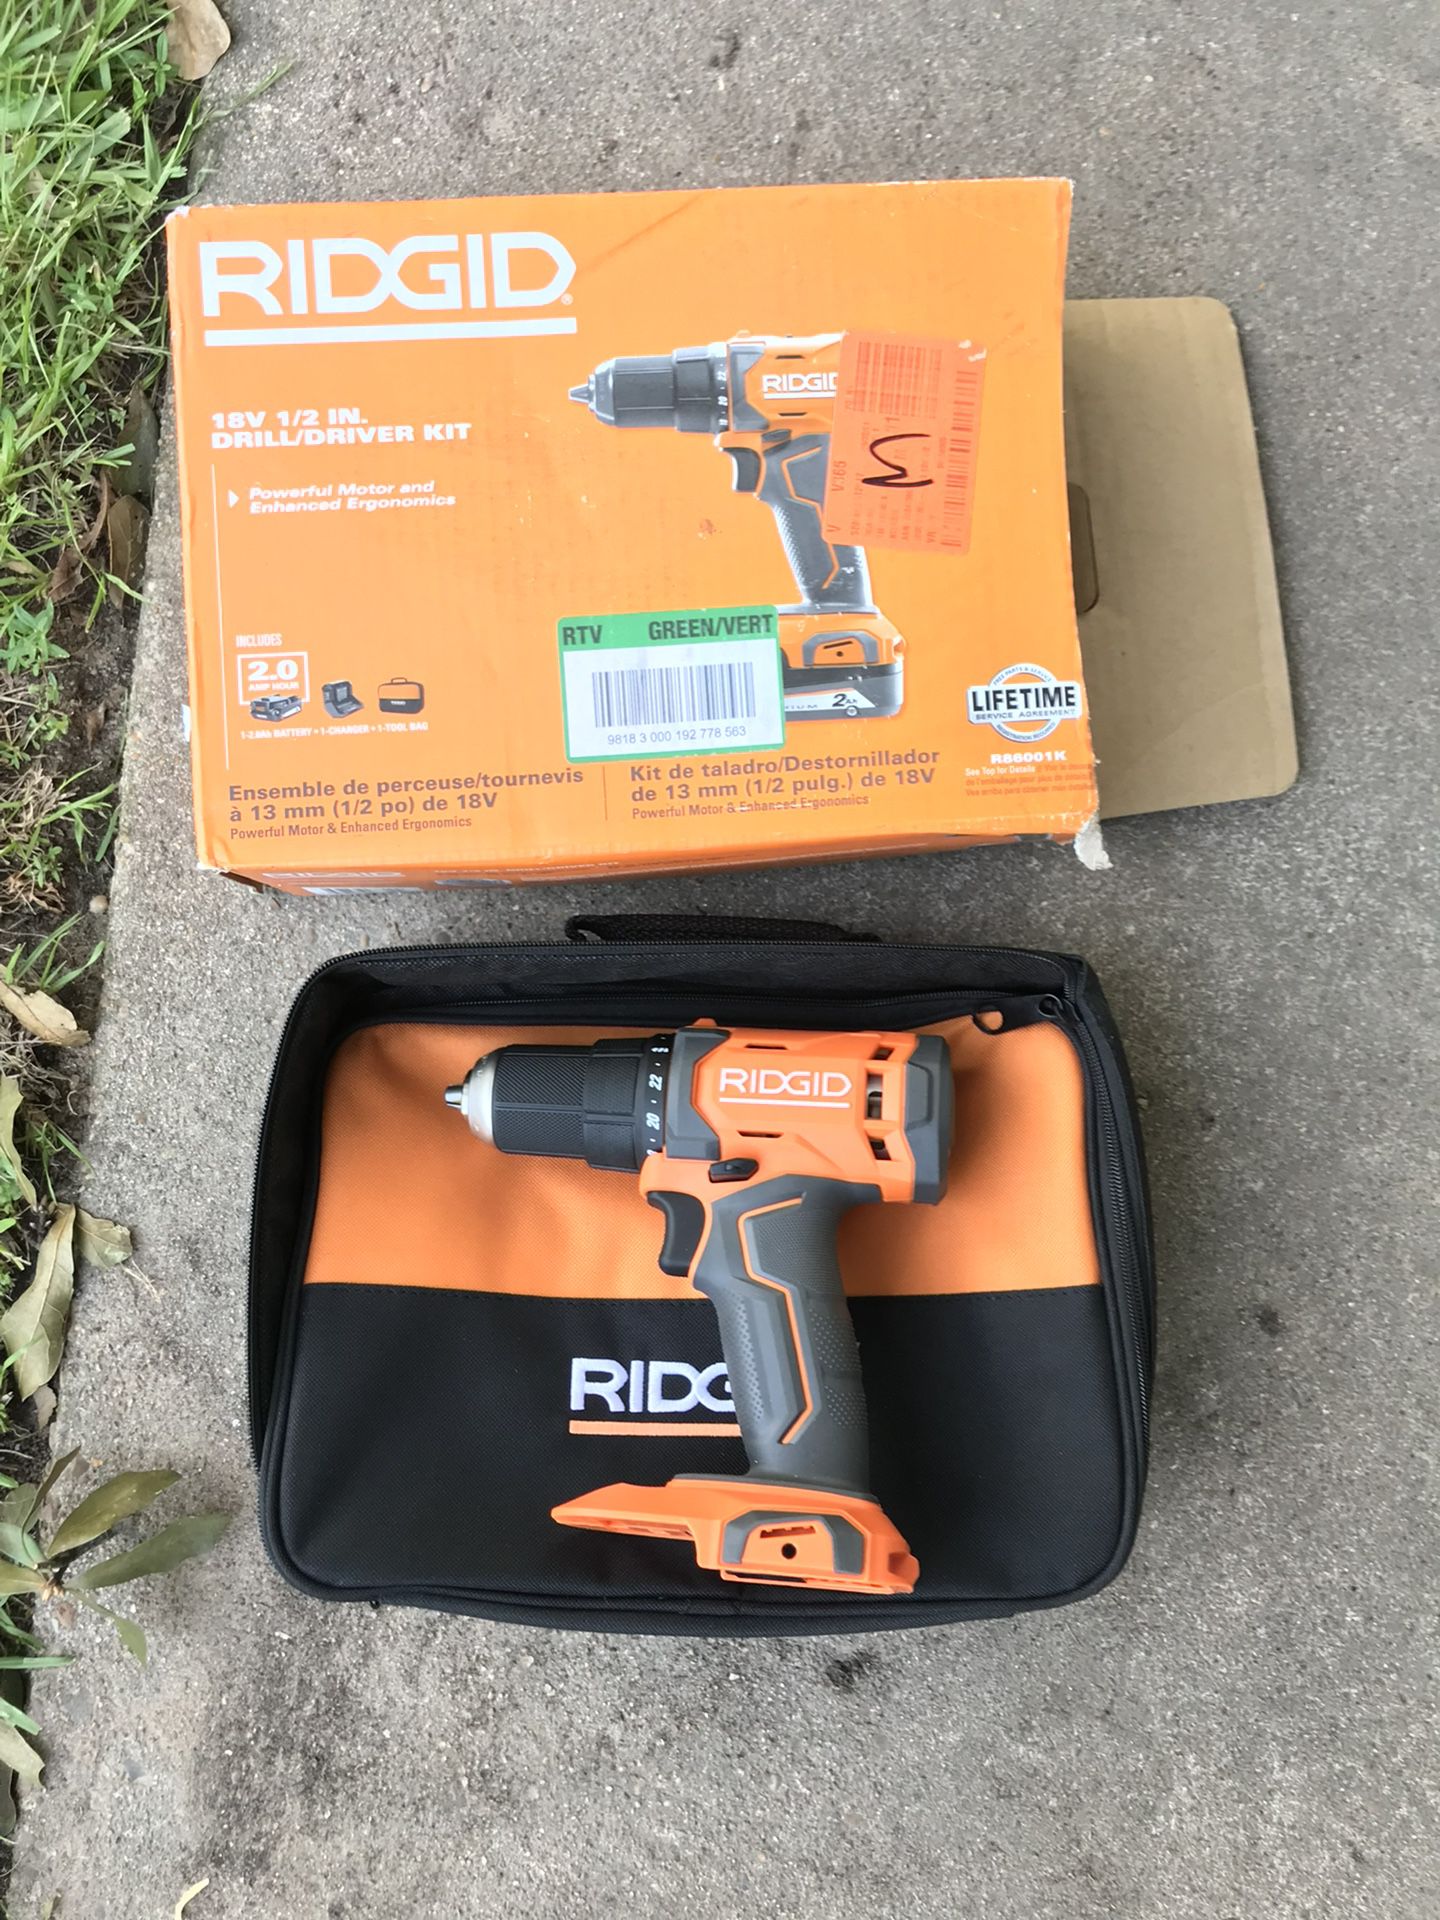 RIDGID 18v DRILL (Tool Only)